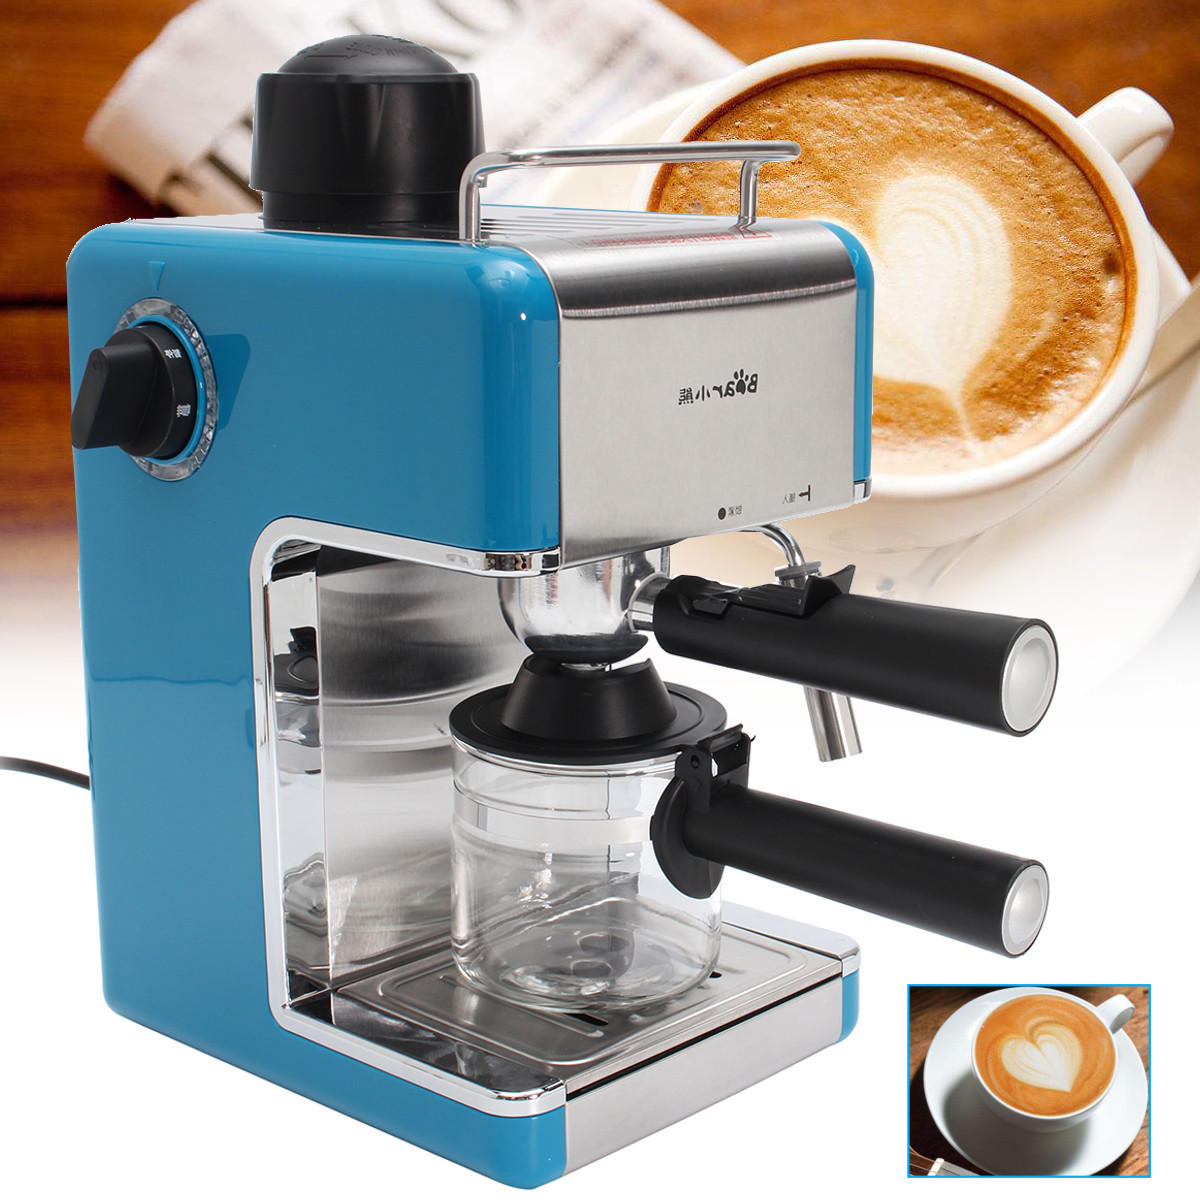 coffee maker machine price